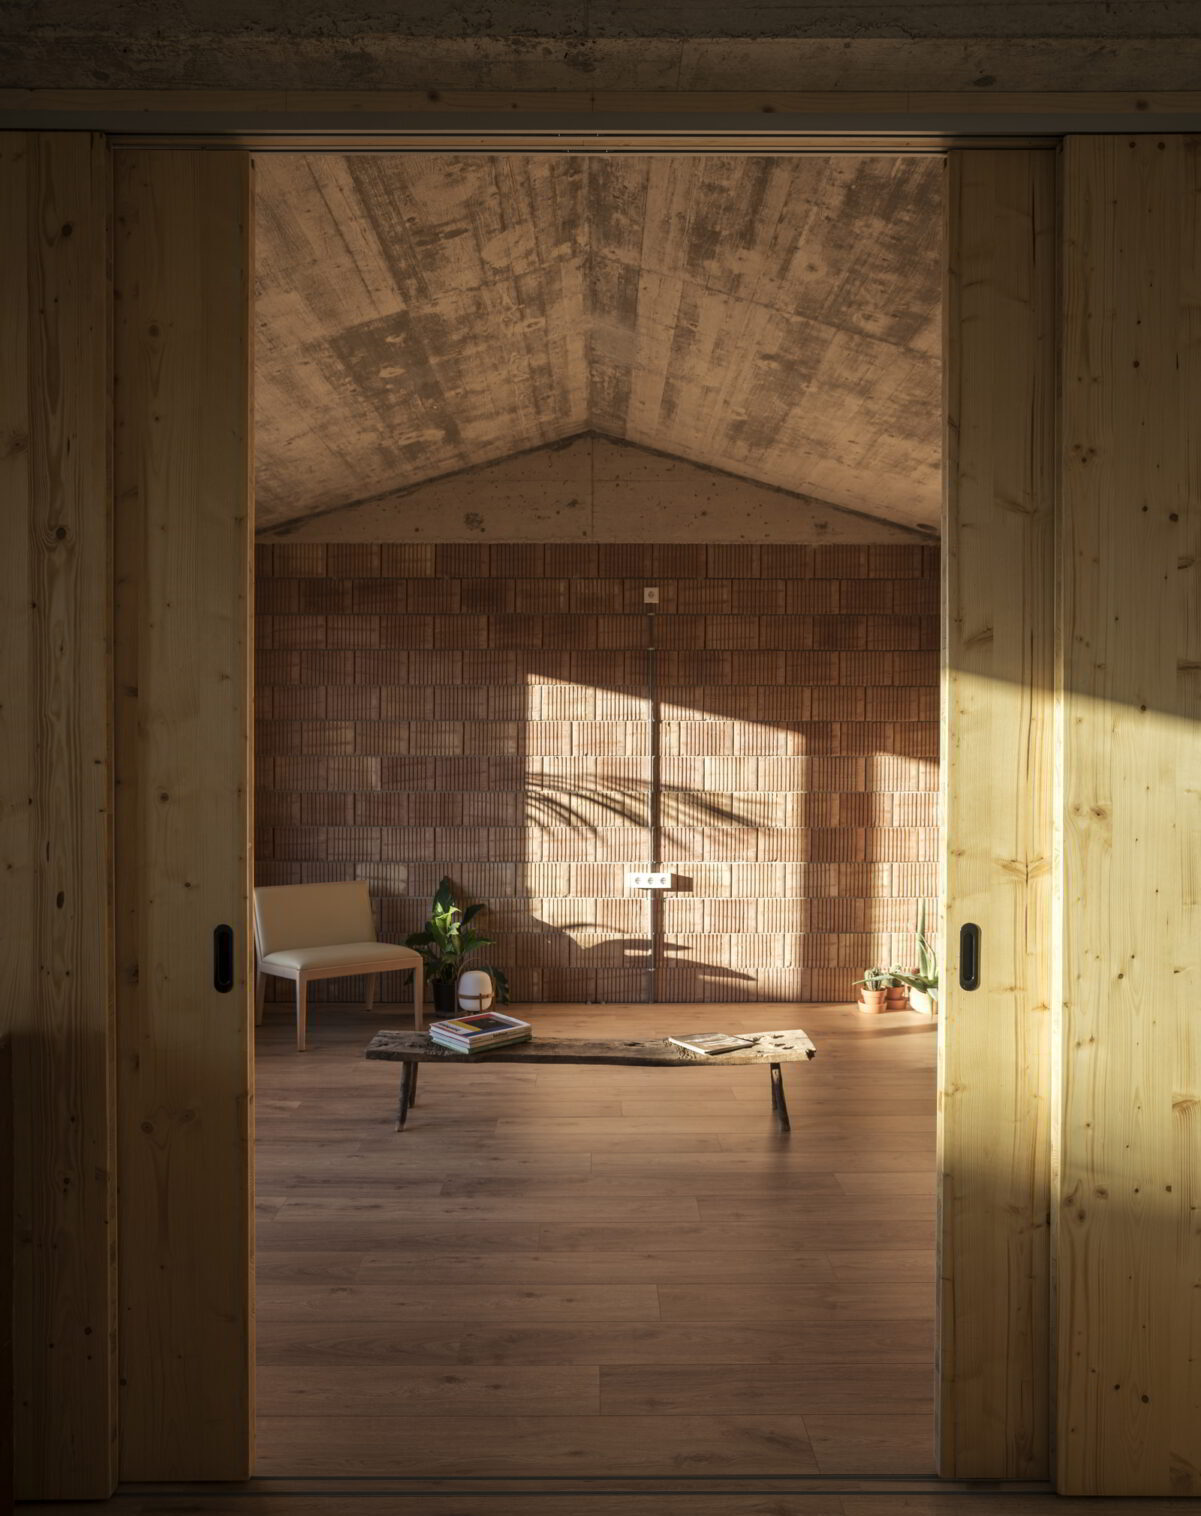 Archisearch NØRA Studio designed Casa en Bateria in Mallorca, Spain